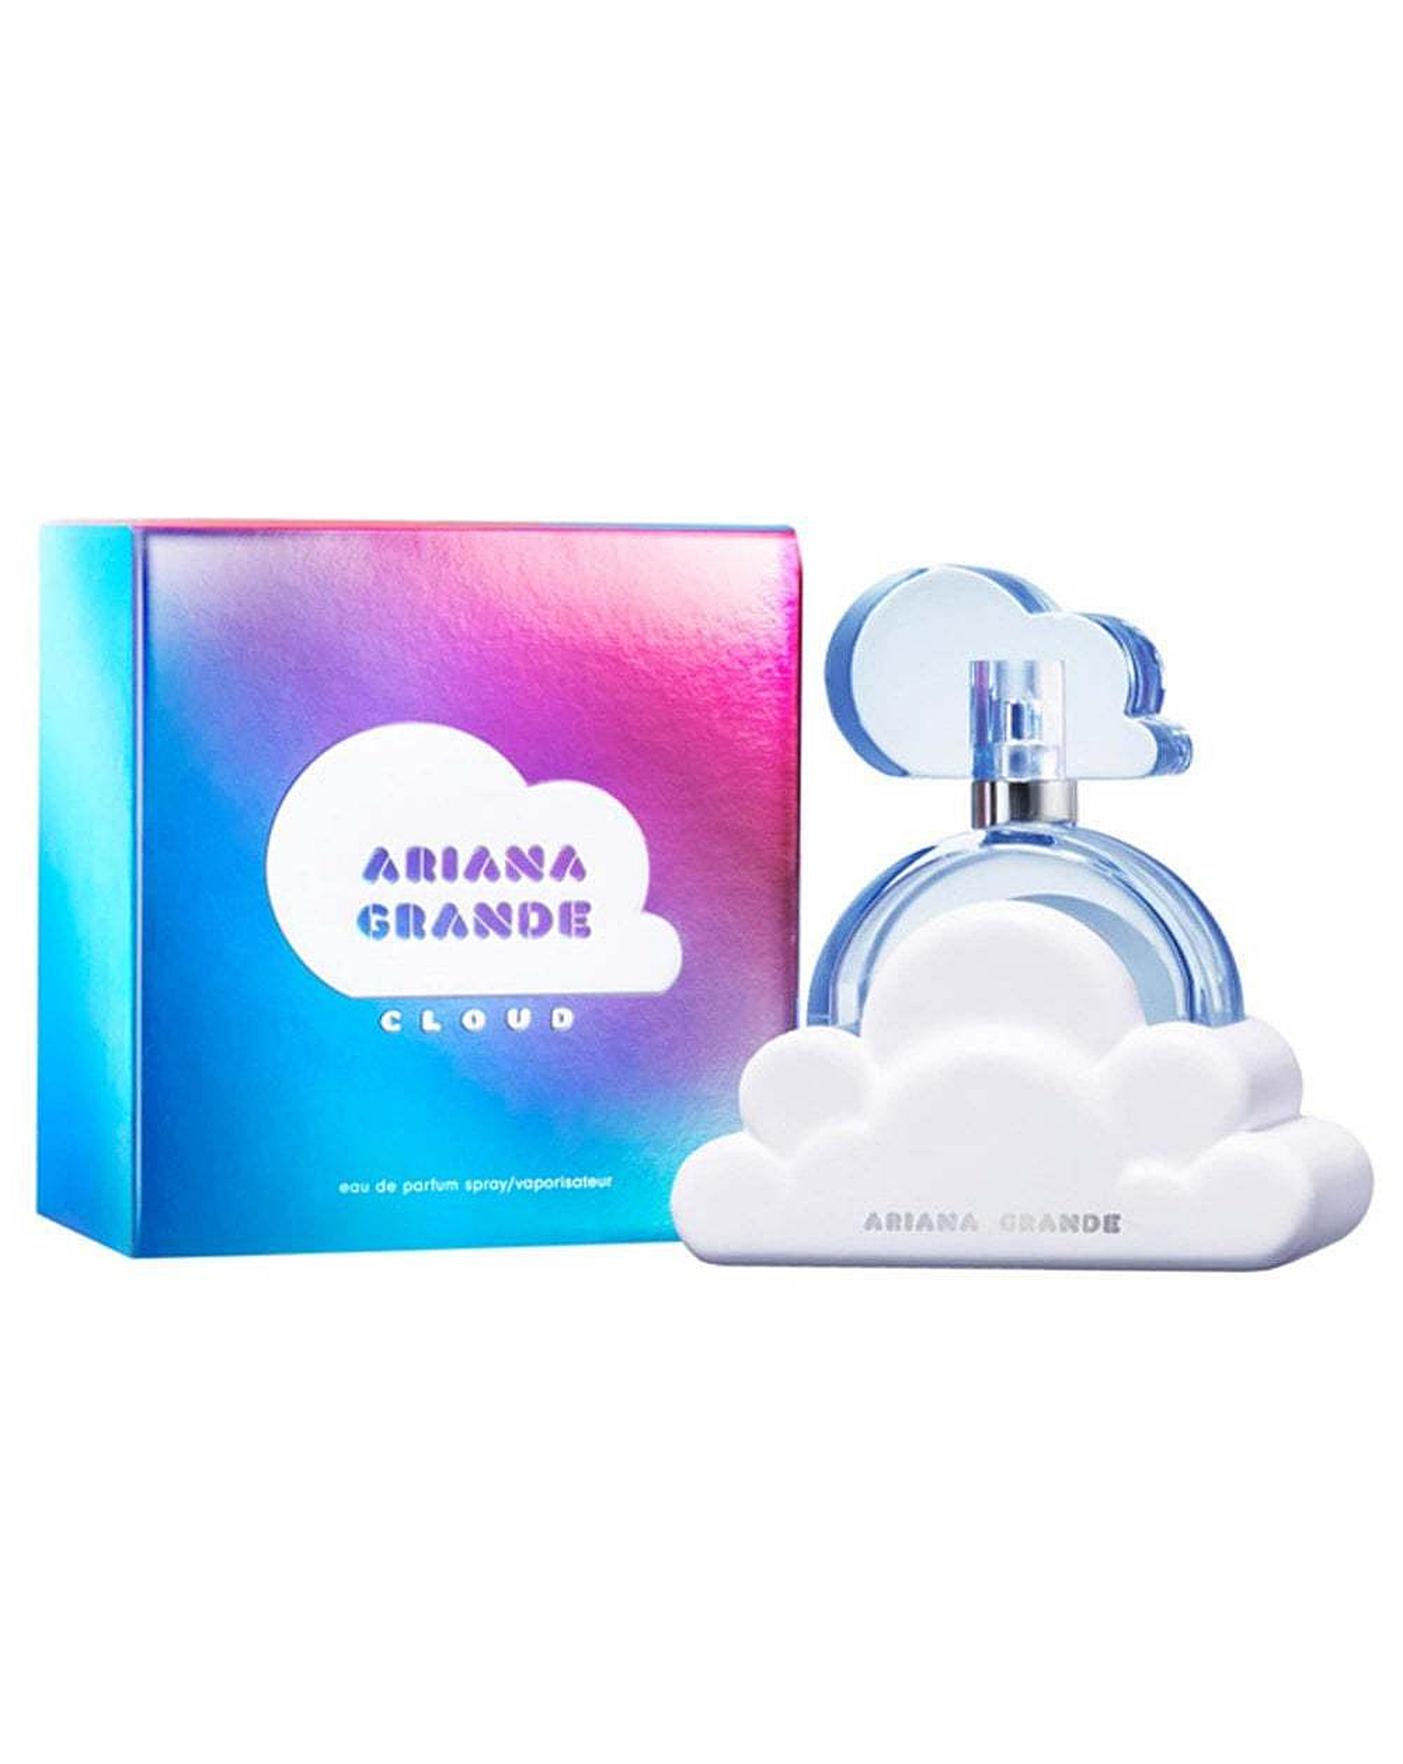 Ariana Grande Cloud 30ml EDP